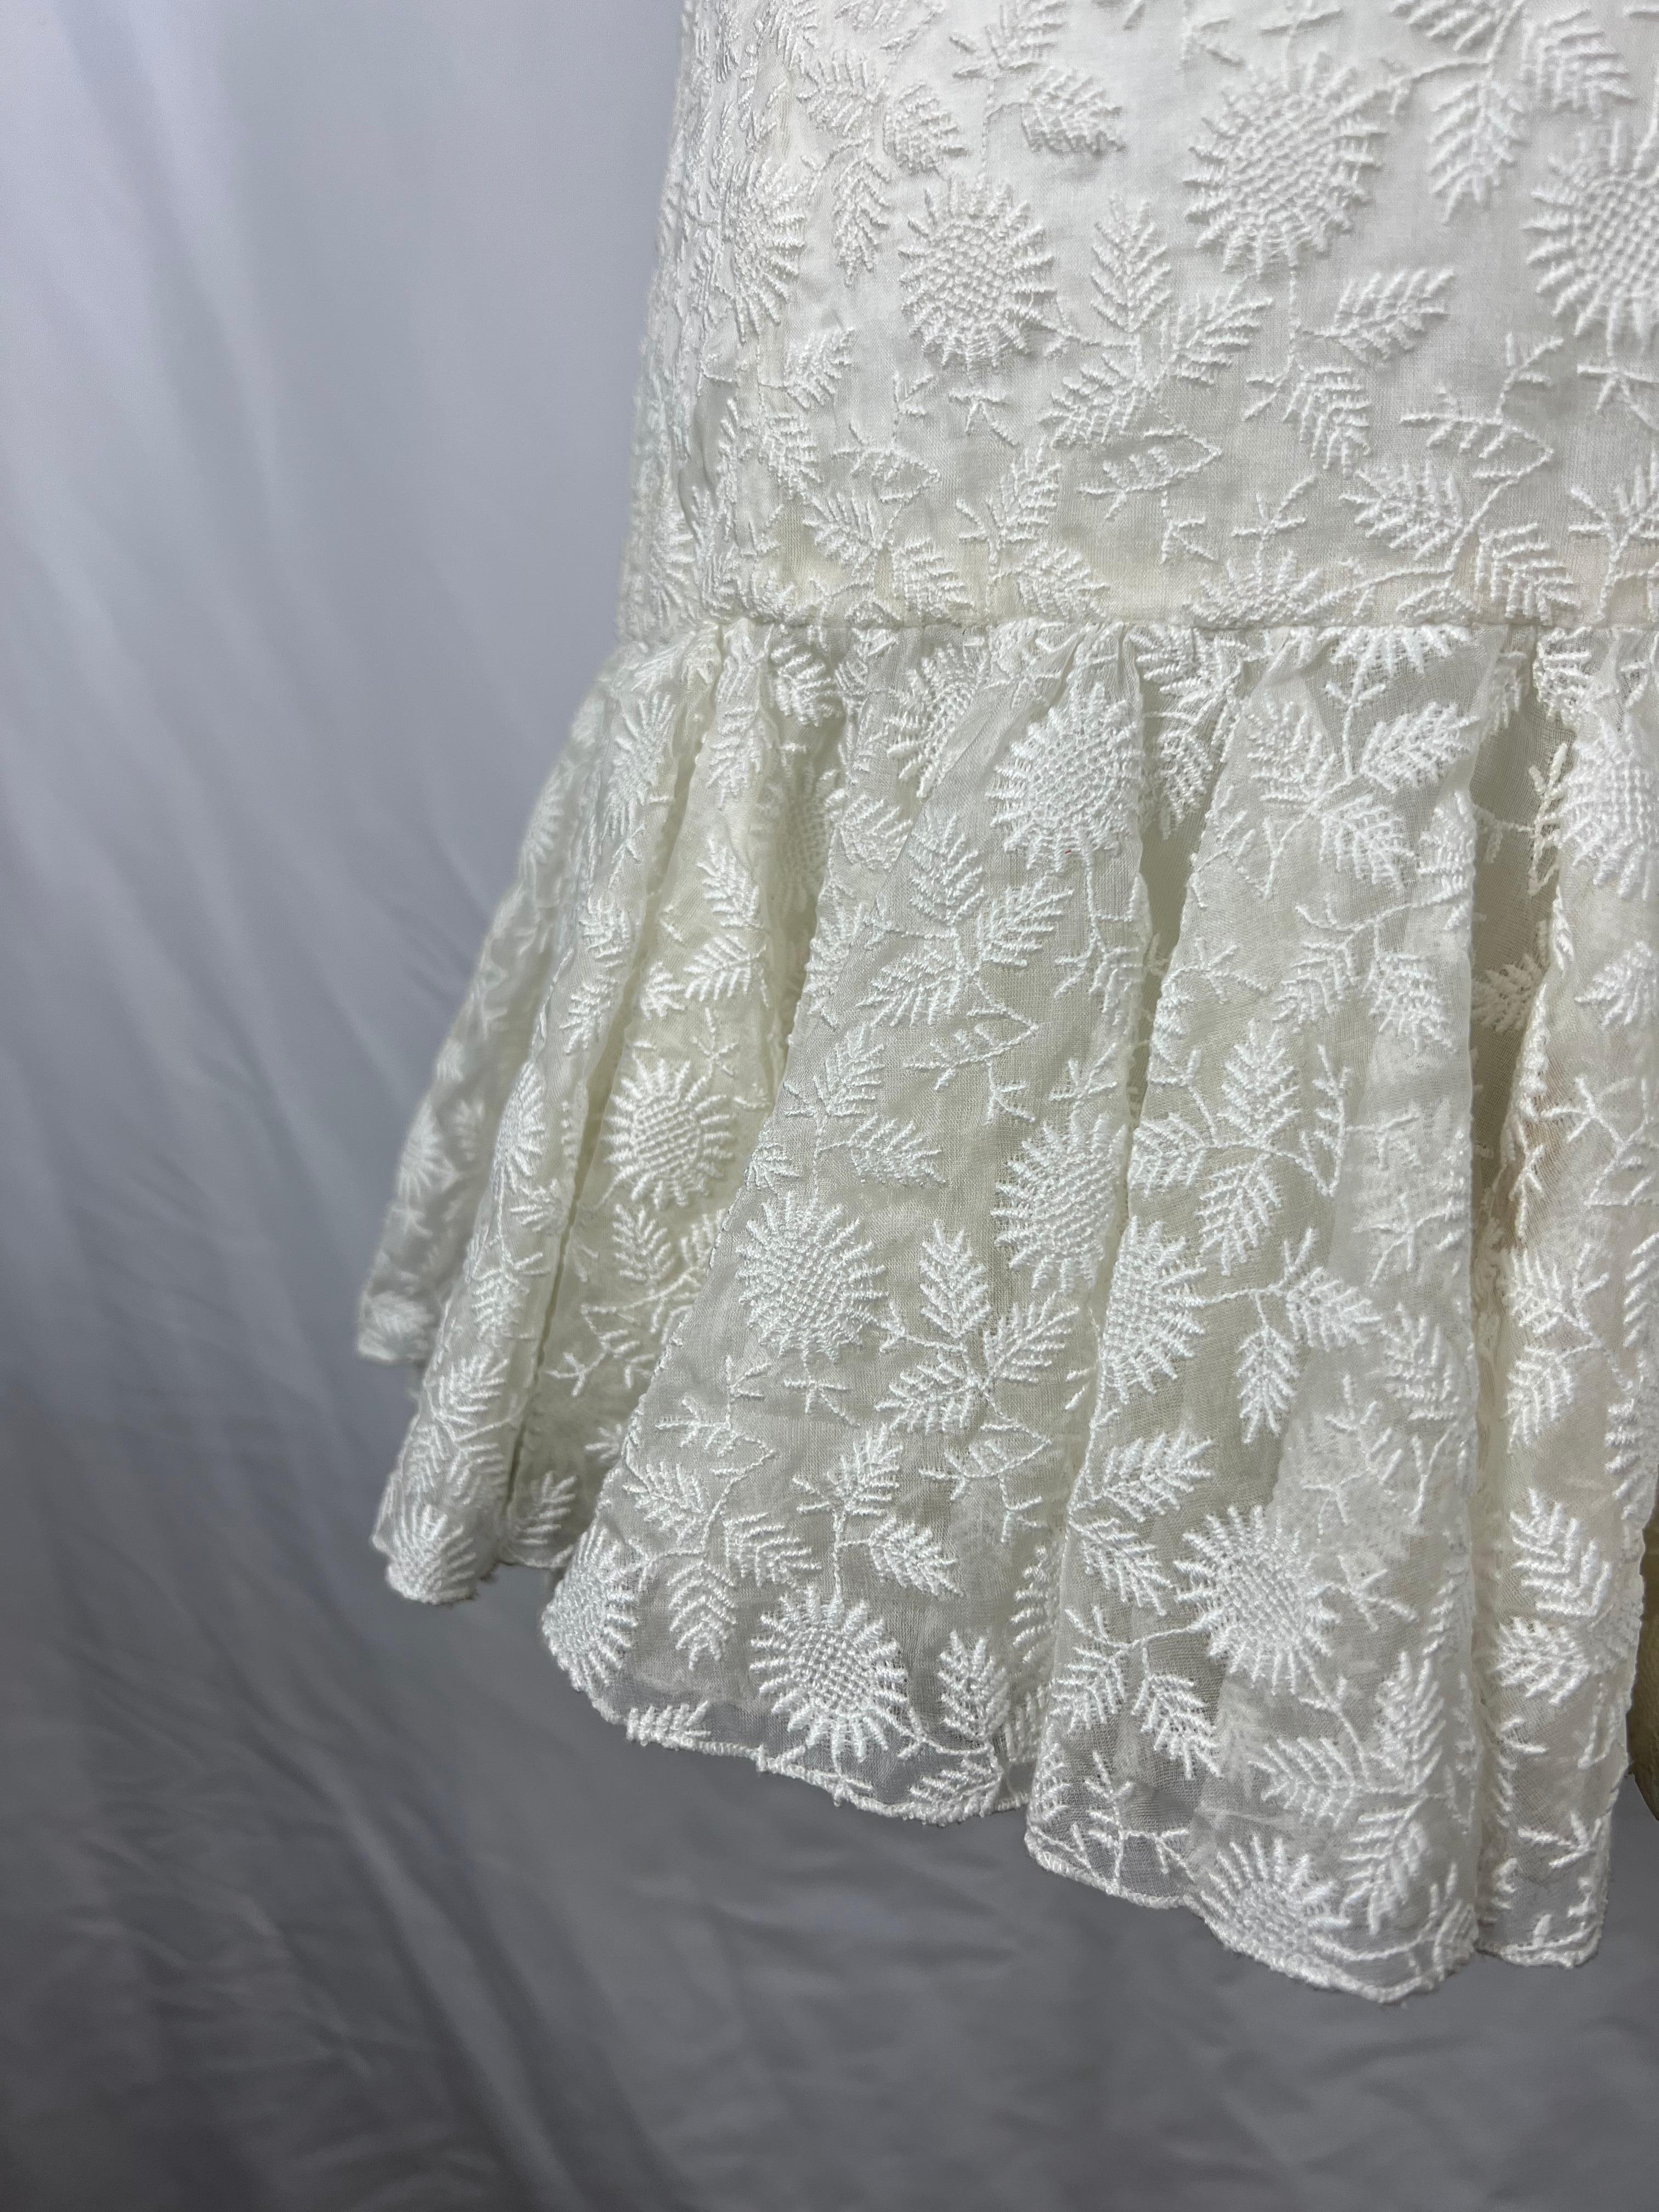  Giambattista Valli Floral Embroidered Mini Dress, Size 44 For Sale 1